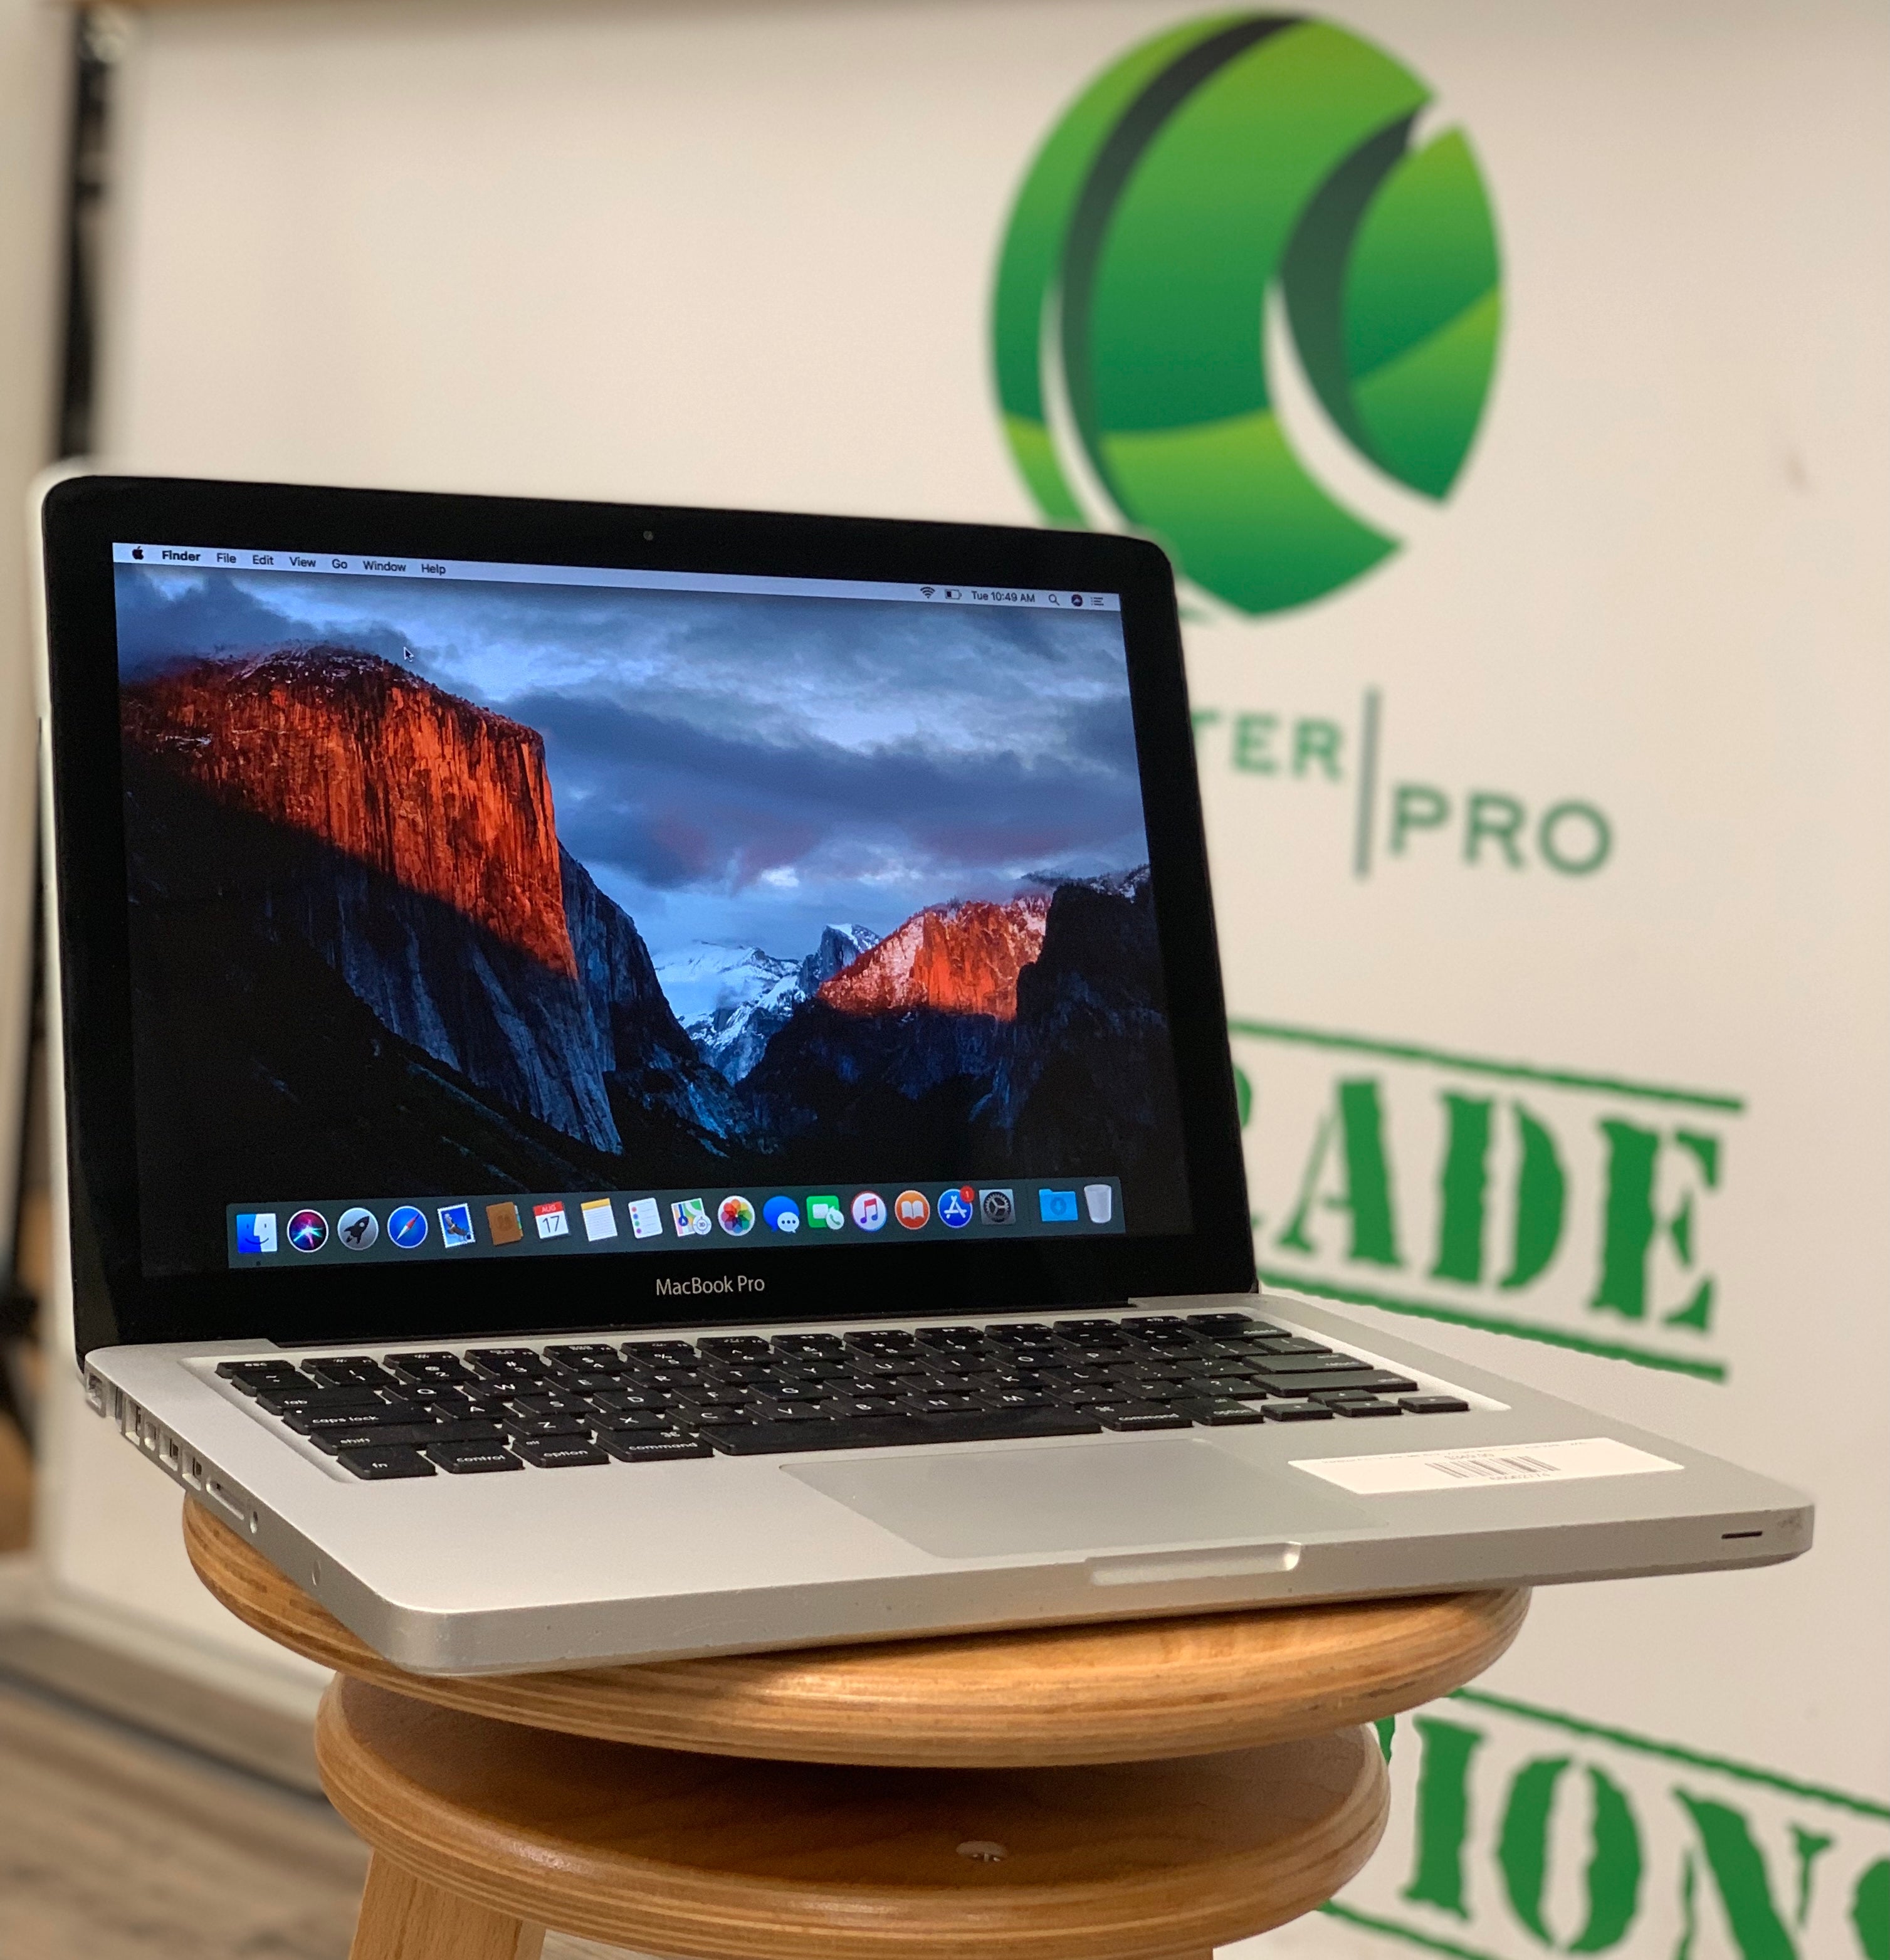 MacBook Pro 13-inch Mid 2012 - 2.5 GHz Dual Core Intel Core i5 - 8